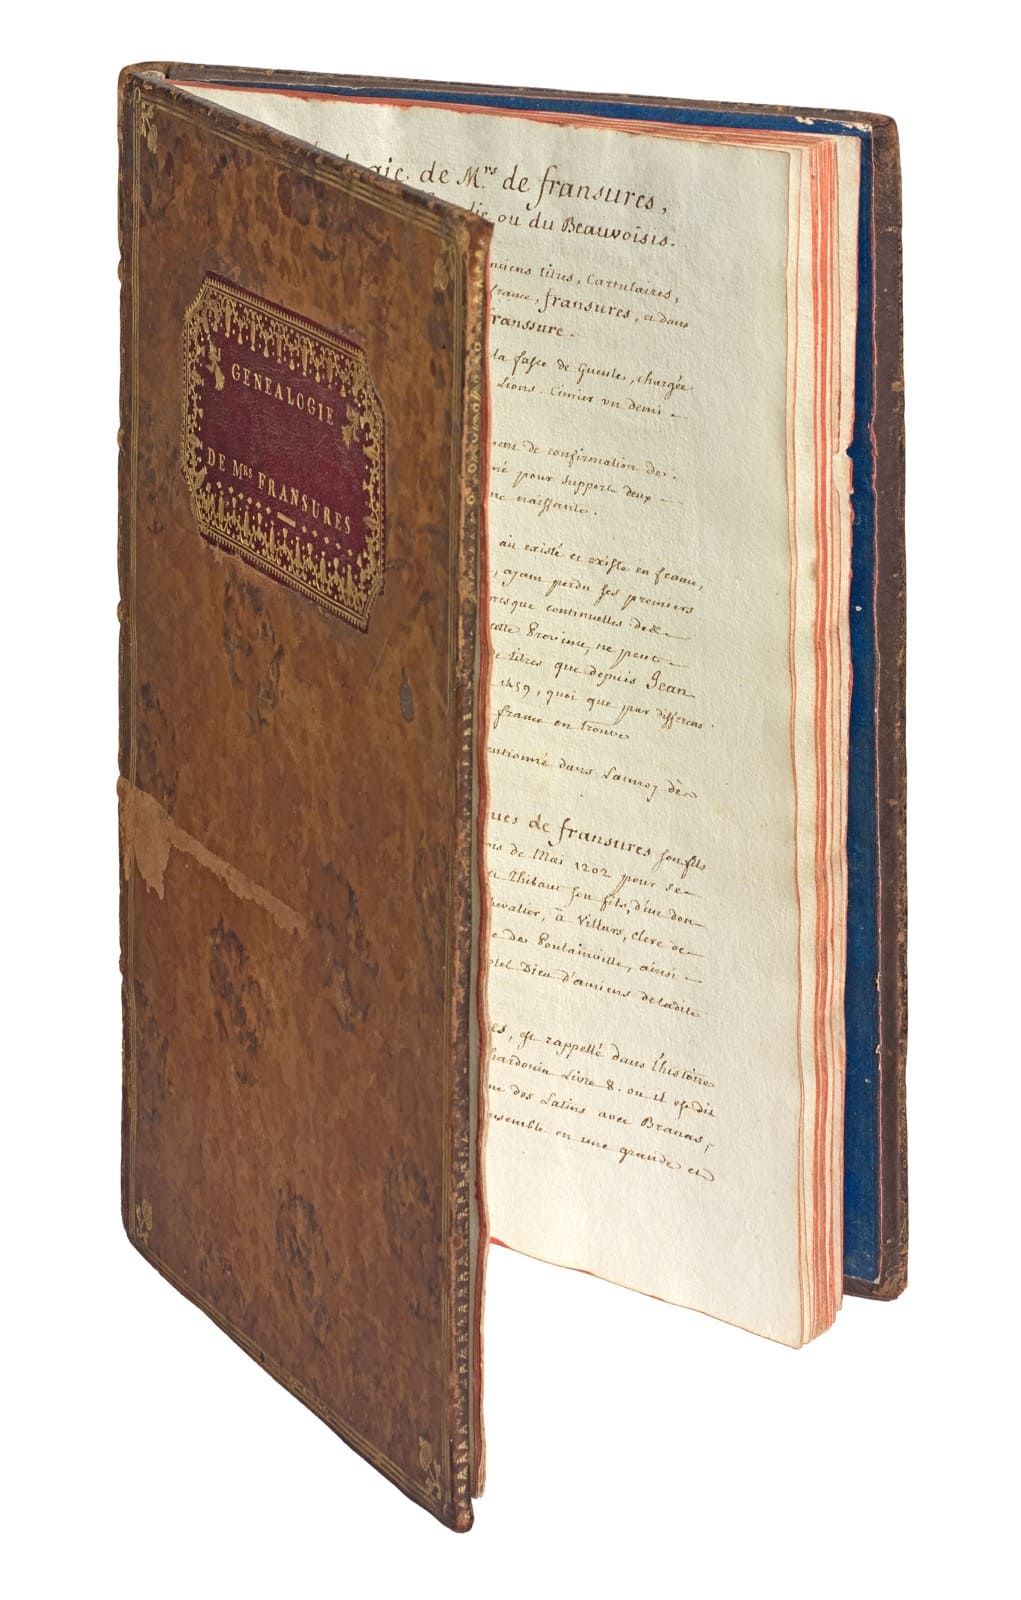 [FRANSURES]. Genealogia della signora de Fransures. Manoscritto datato 1780, in-&hellip;